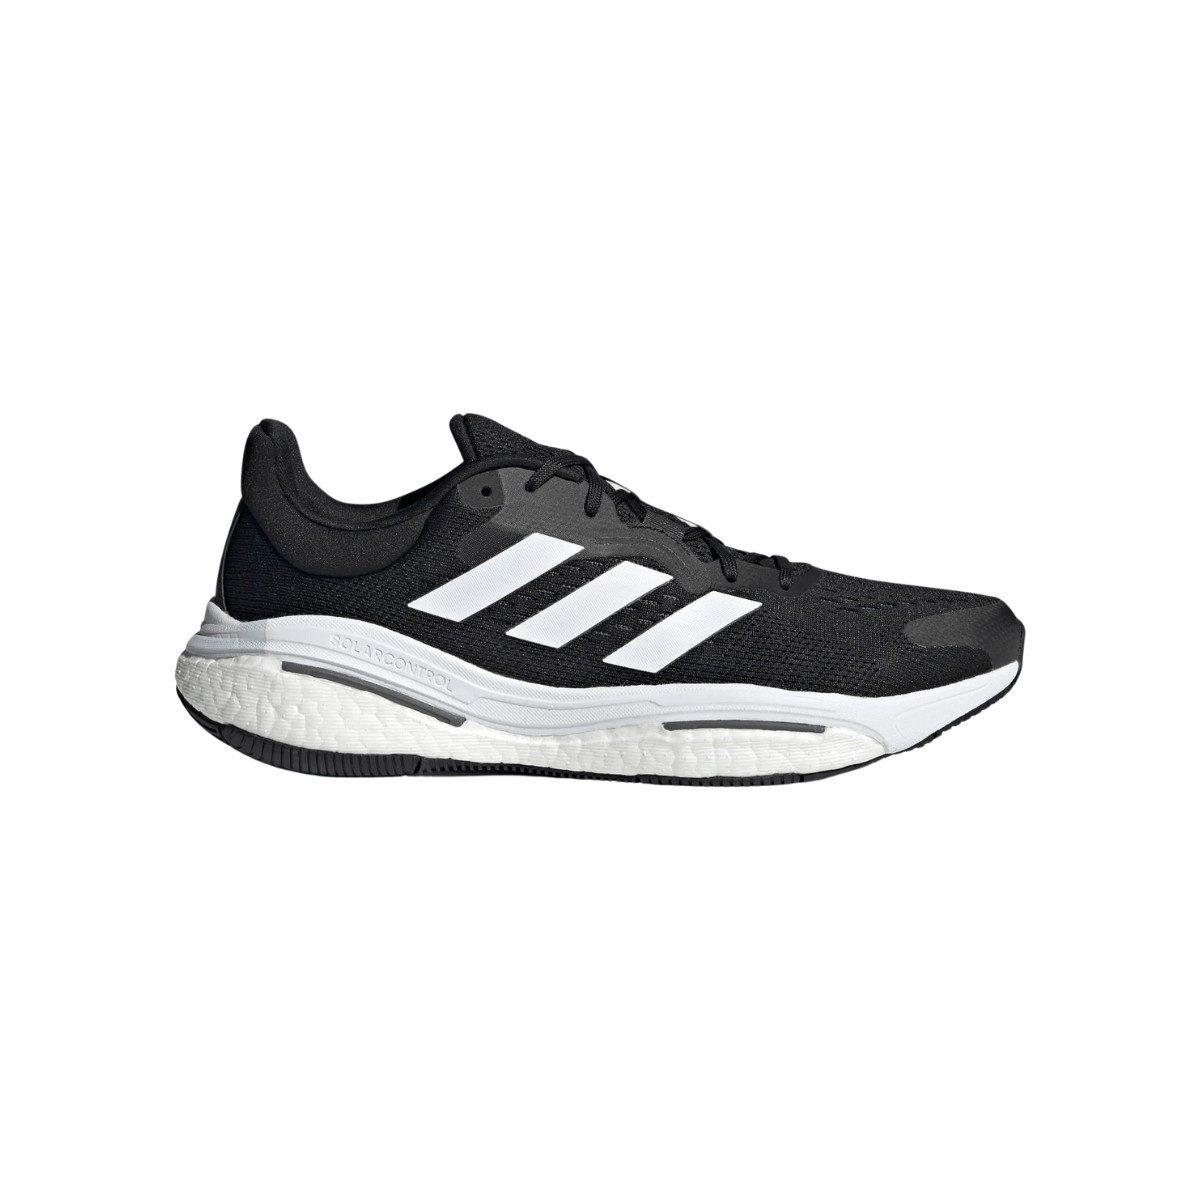 Zapatillas Adidas Solarcontrol Negro Blanco AW22, Talla UK 12